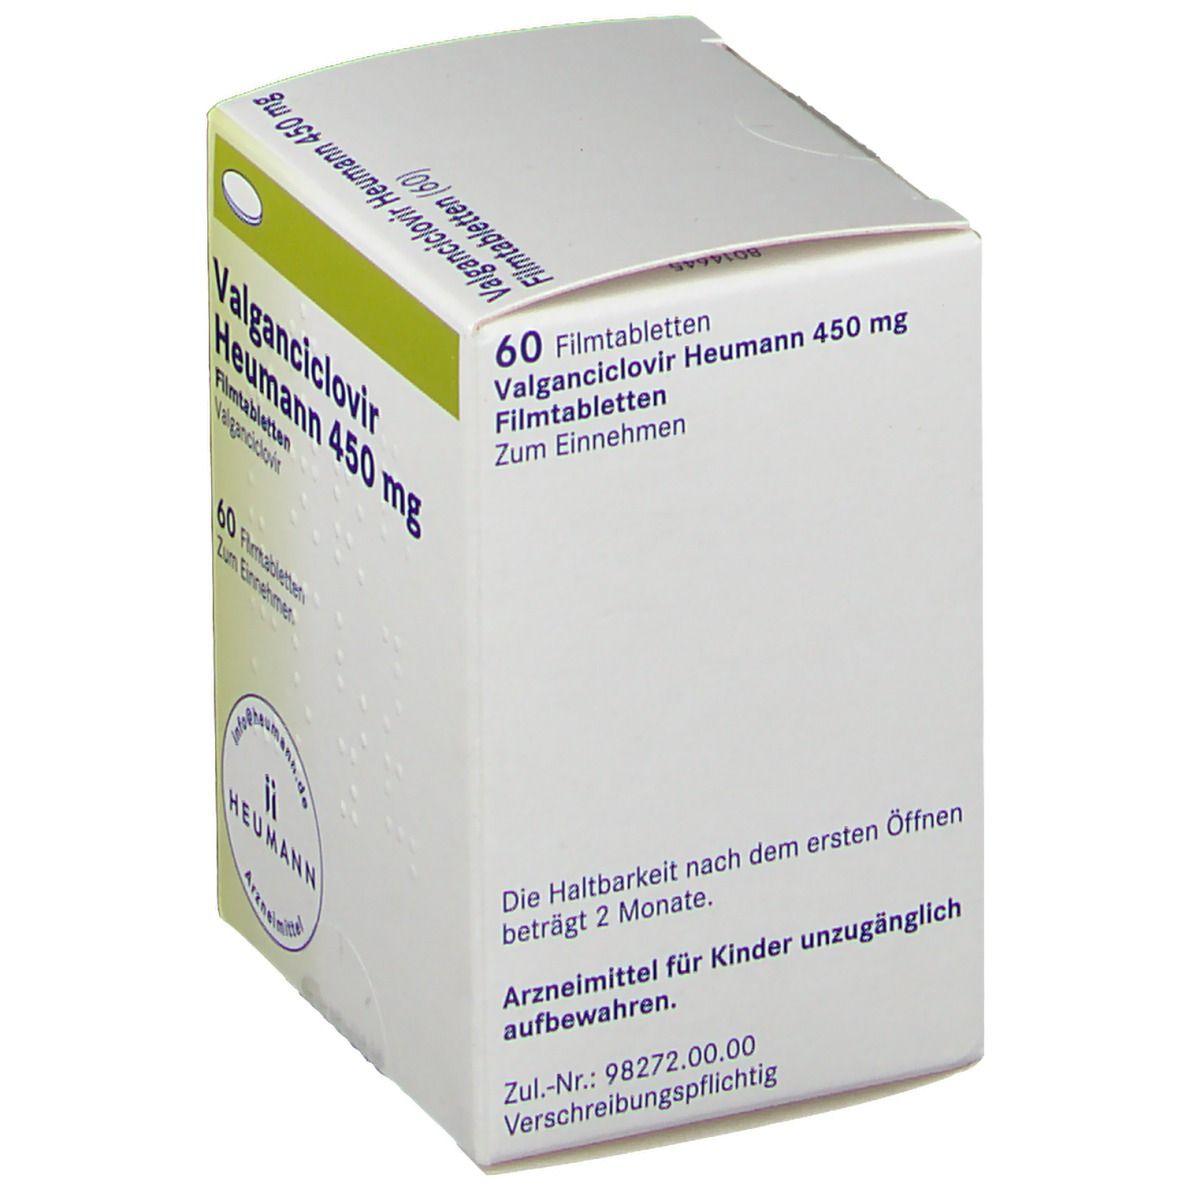 Valganciclovir Heumann 450 mg